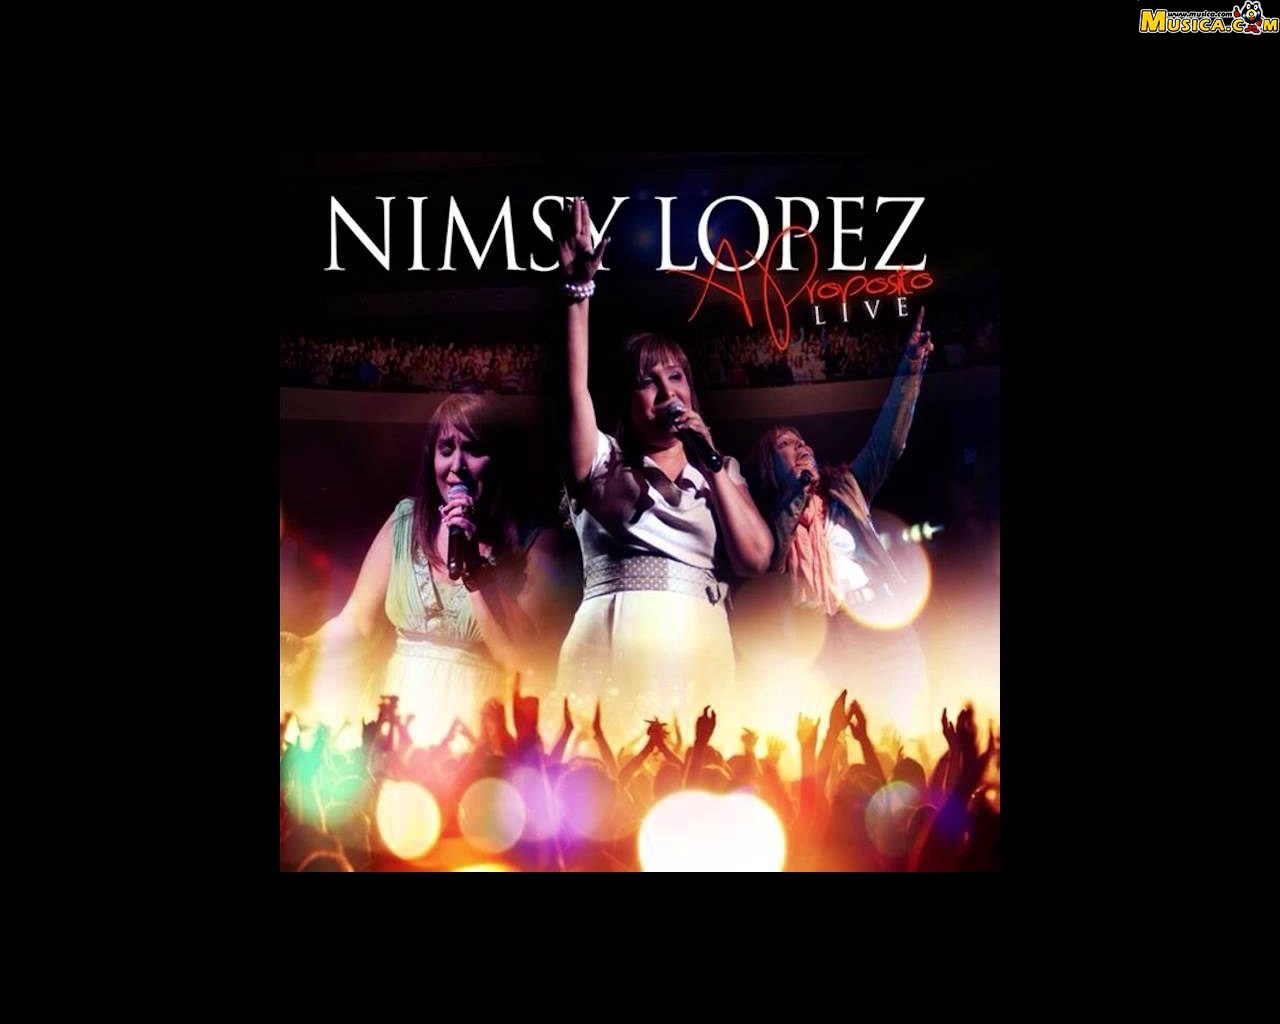 Fondo de pantalla de Nimsy Lopez